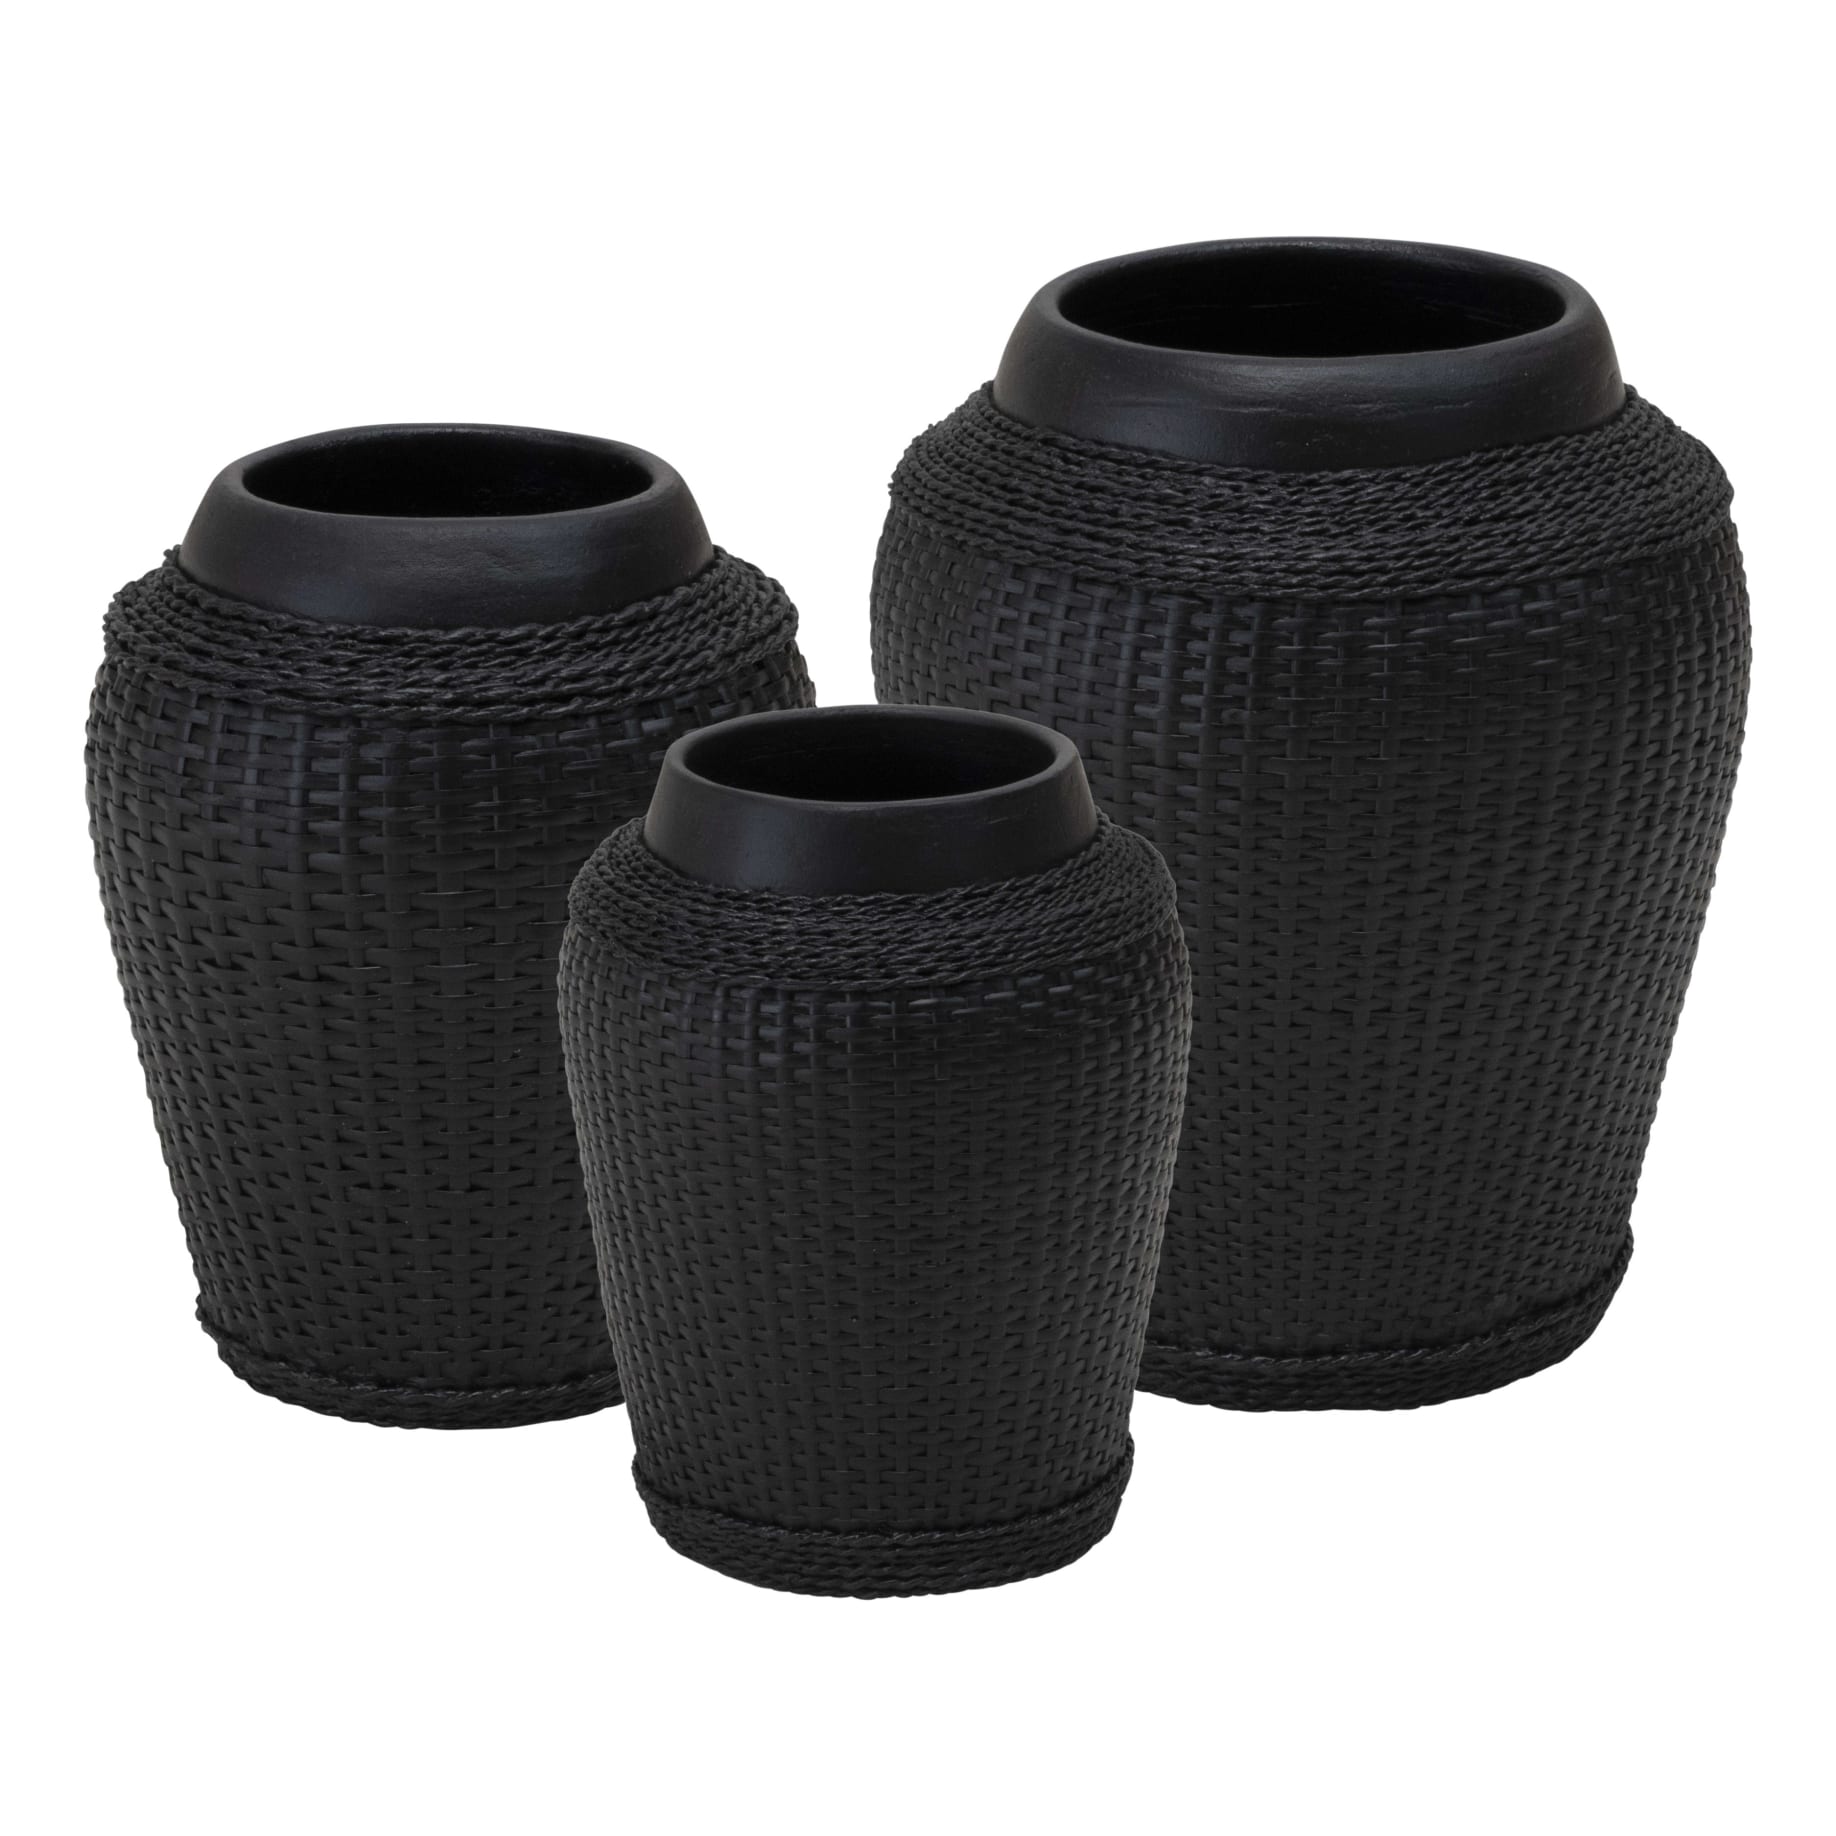 Bamboo Wrap Vase Set of 3 in Black